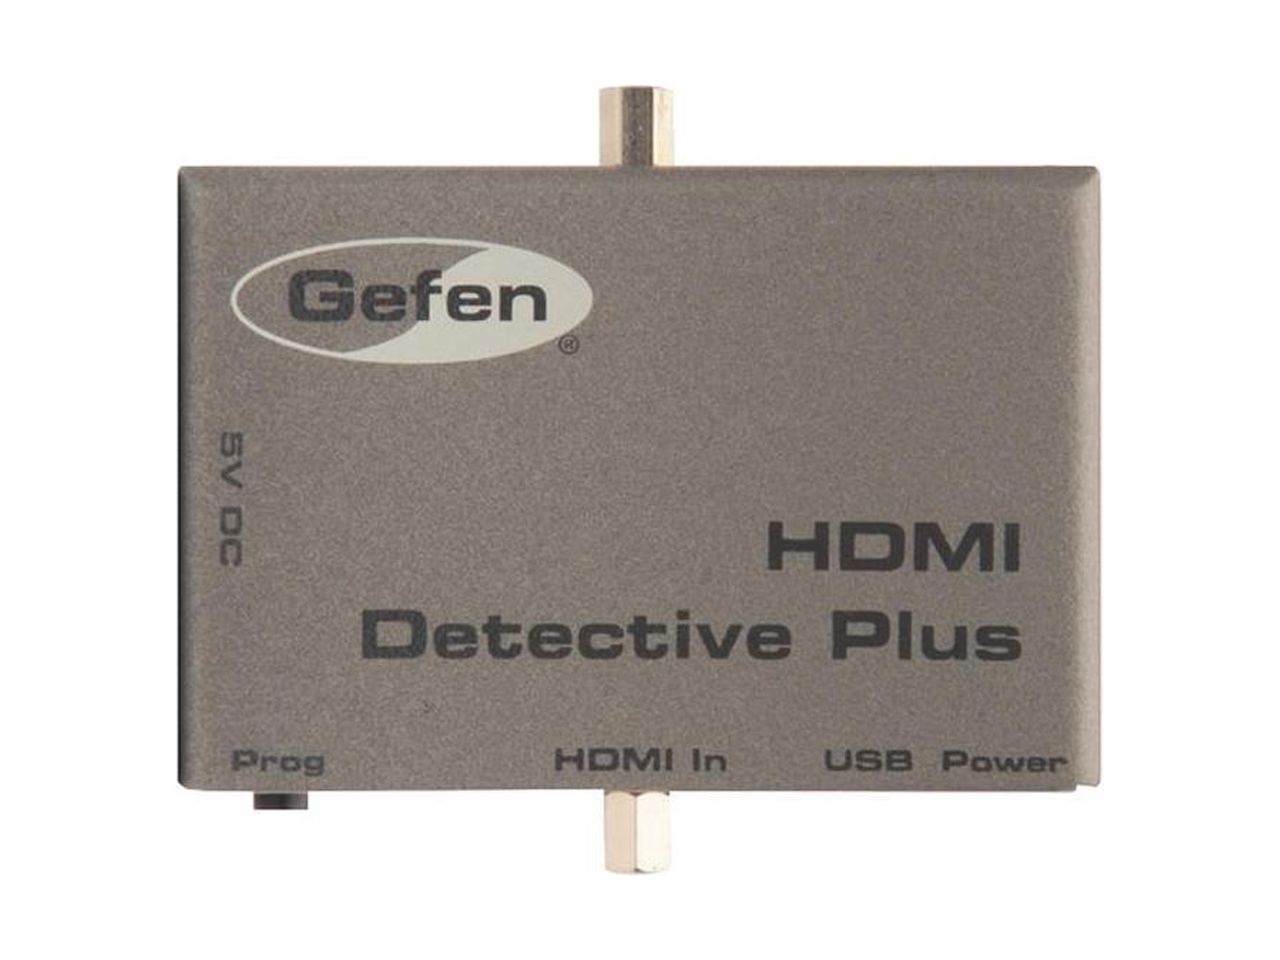 Gefen Hdmi Detective Plus - image 4 of 14